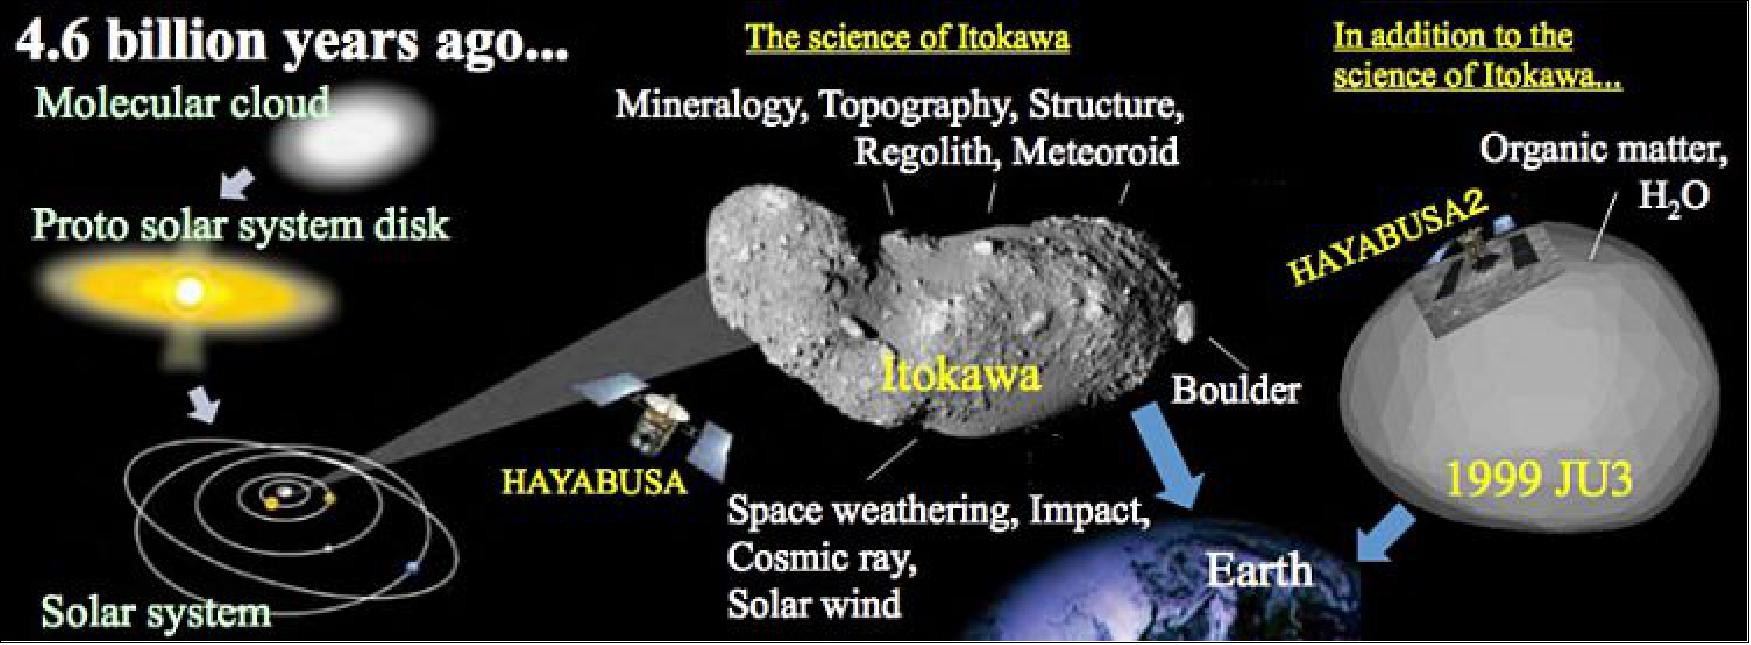 Figure 3: Schematic of the science of Hayabusa and Hayabusa-2 missions (image credit: JAXA)